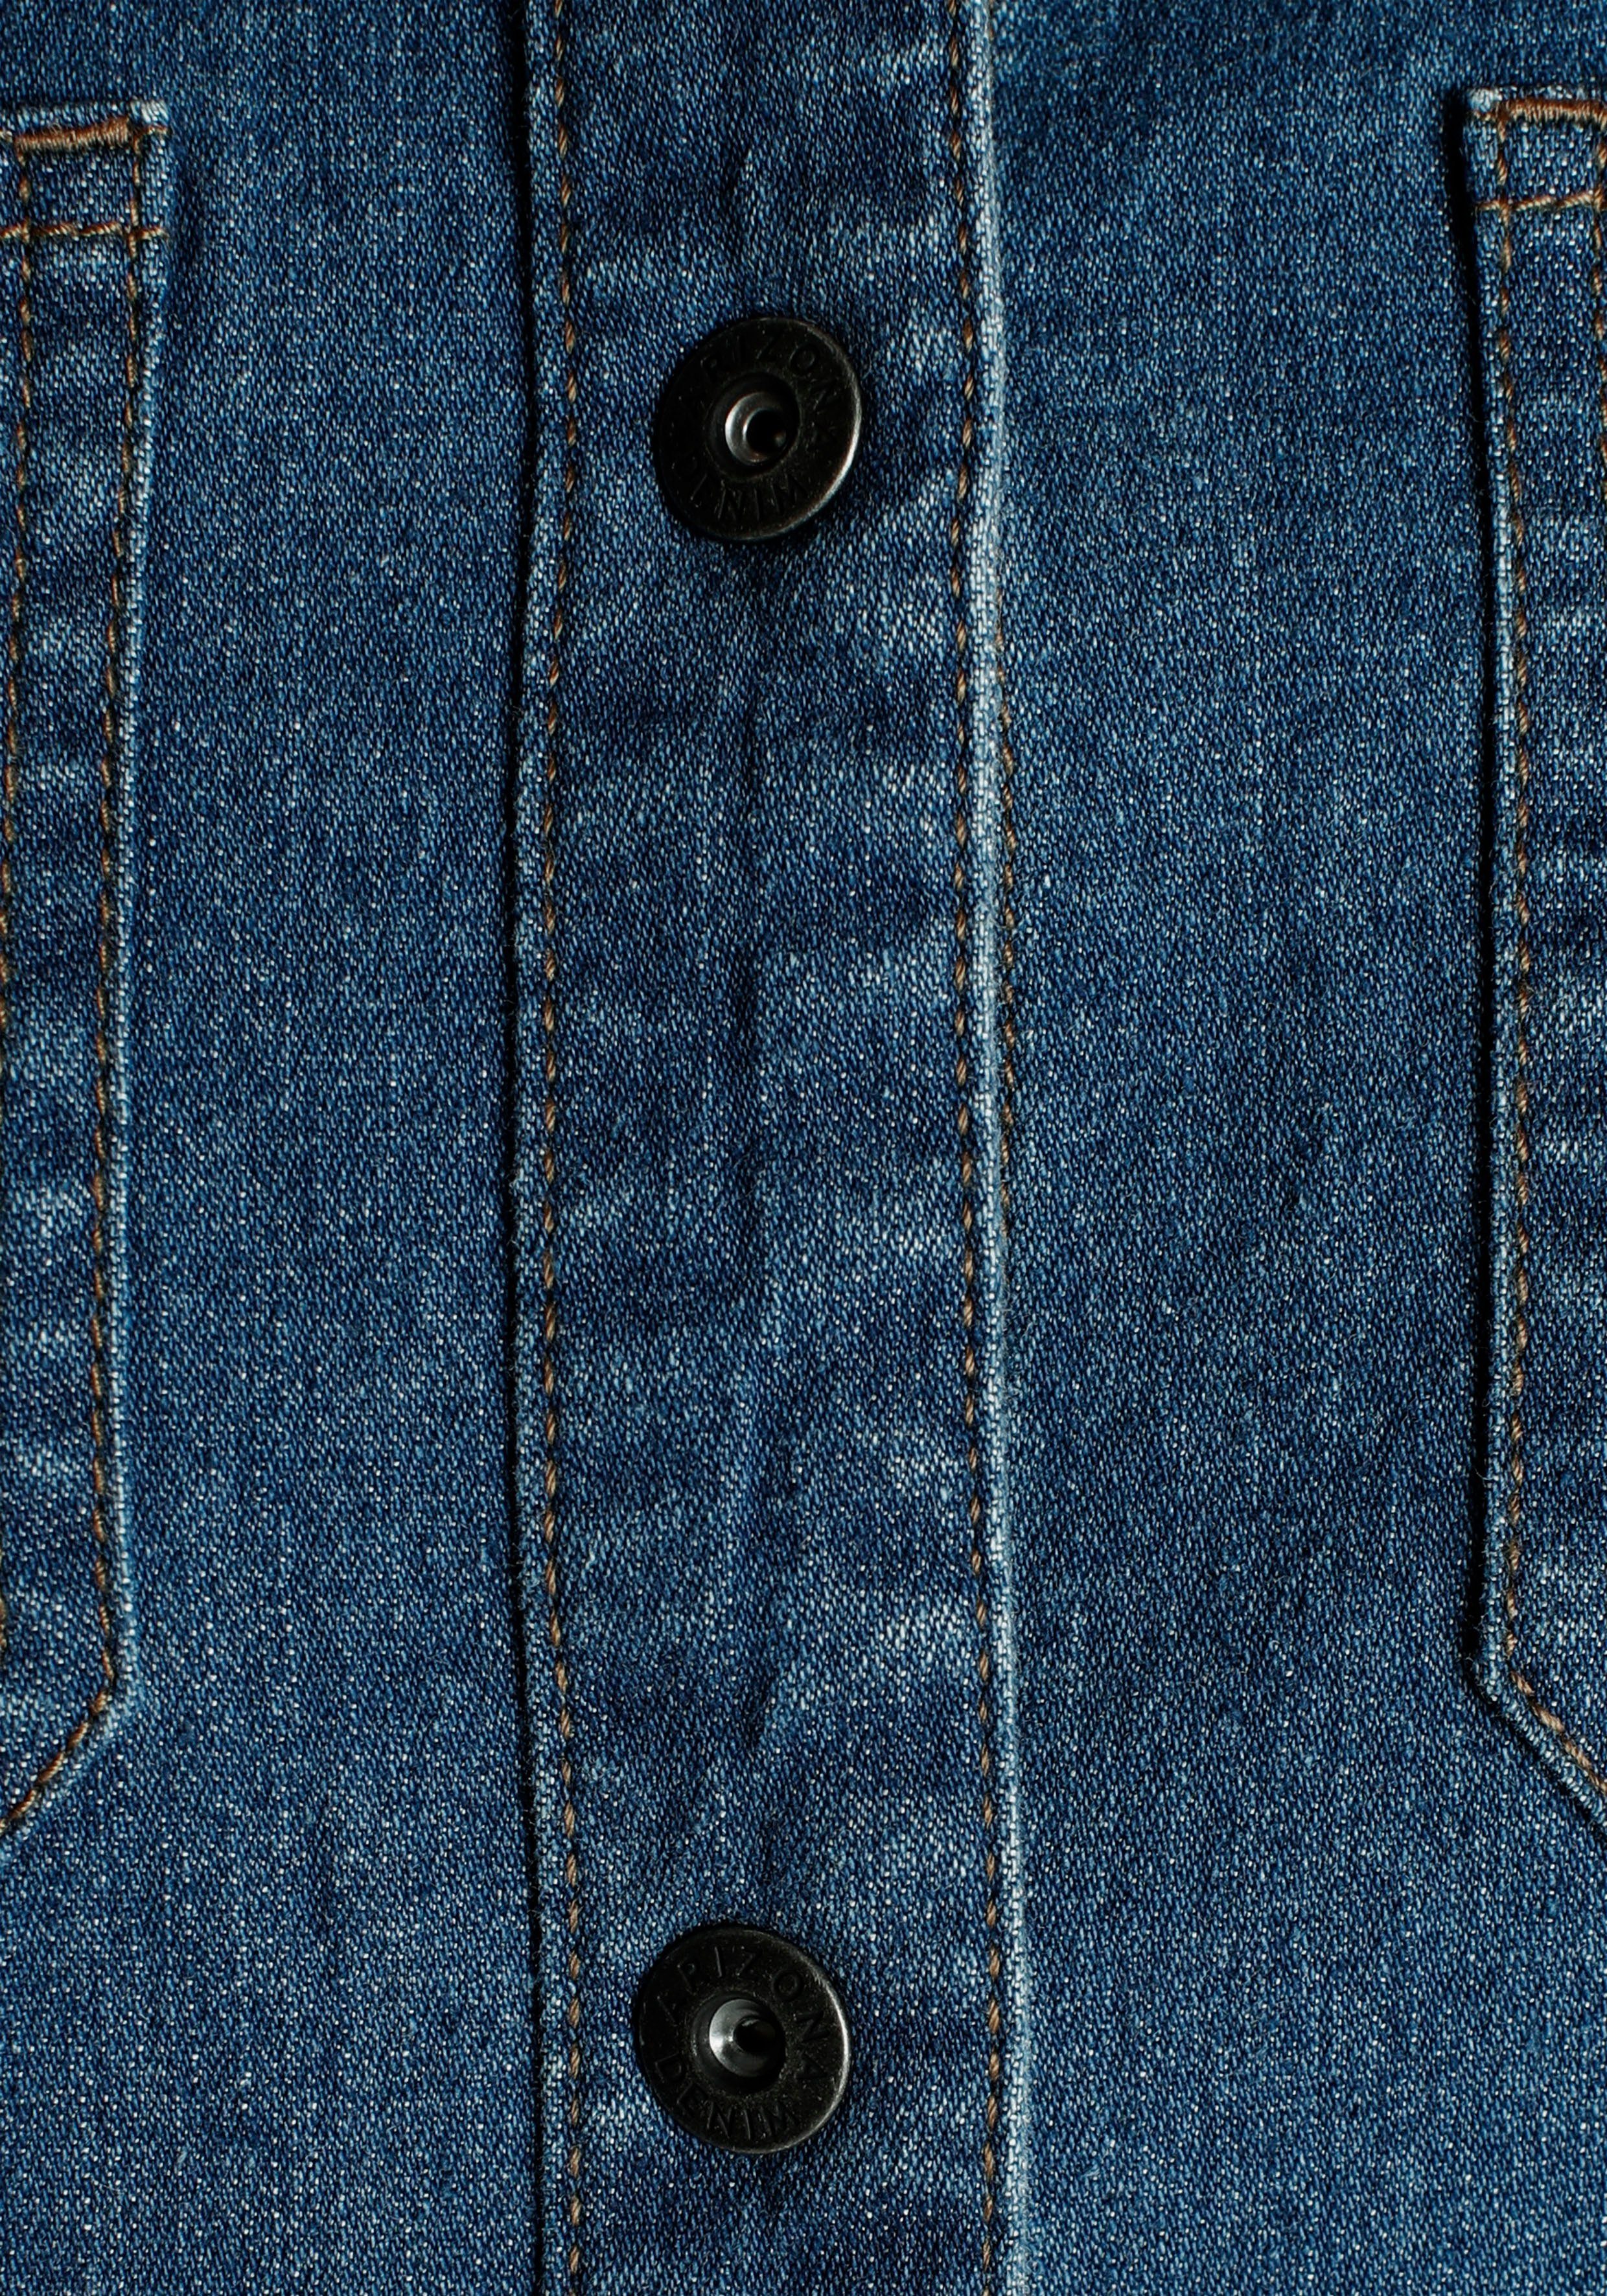 Jeansjacke geschnitten - Arizona Weiter Hemdjacke dark used Denim blue Shacket